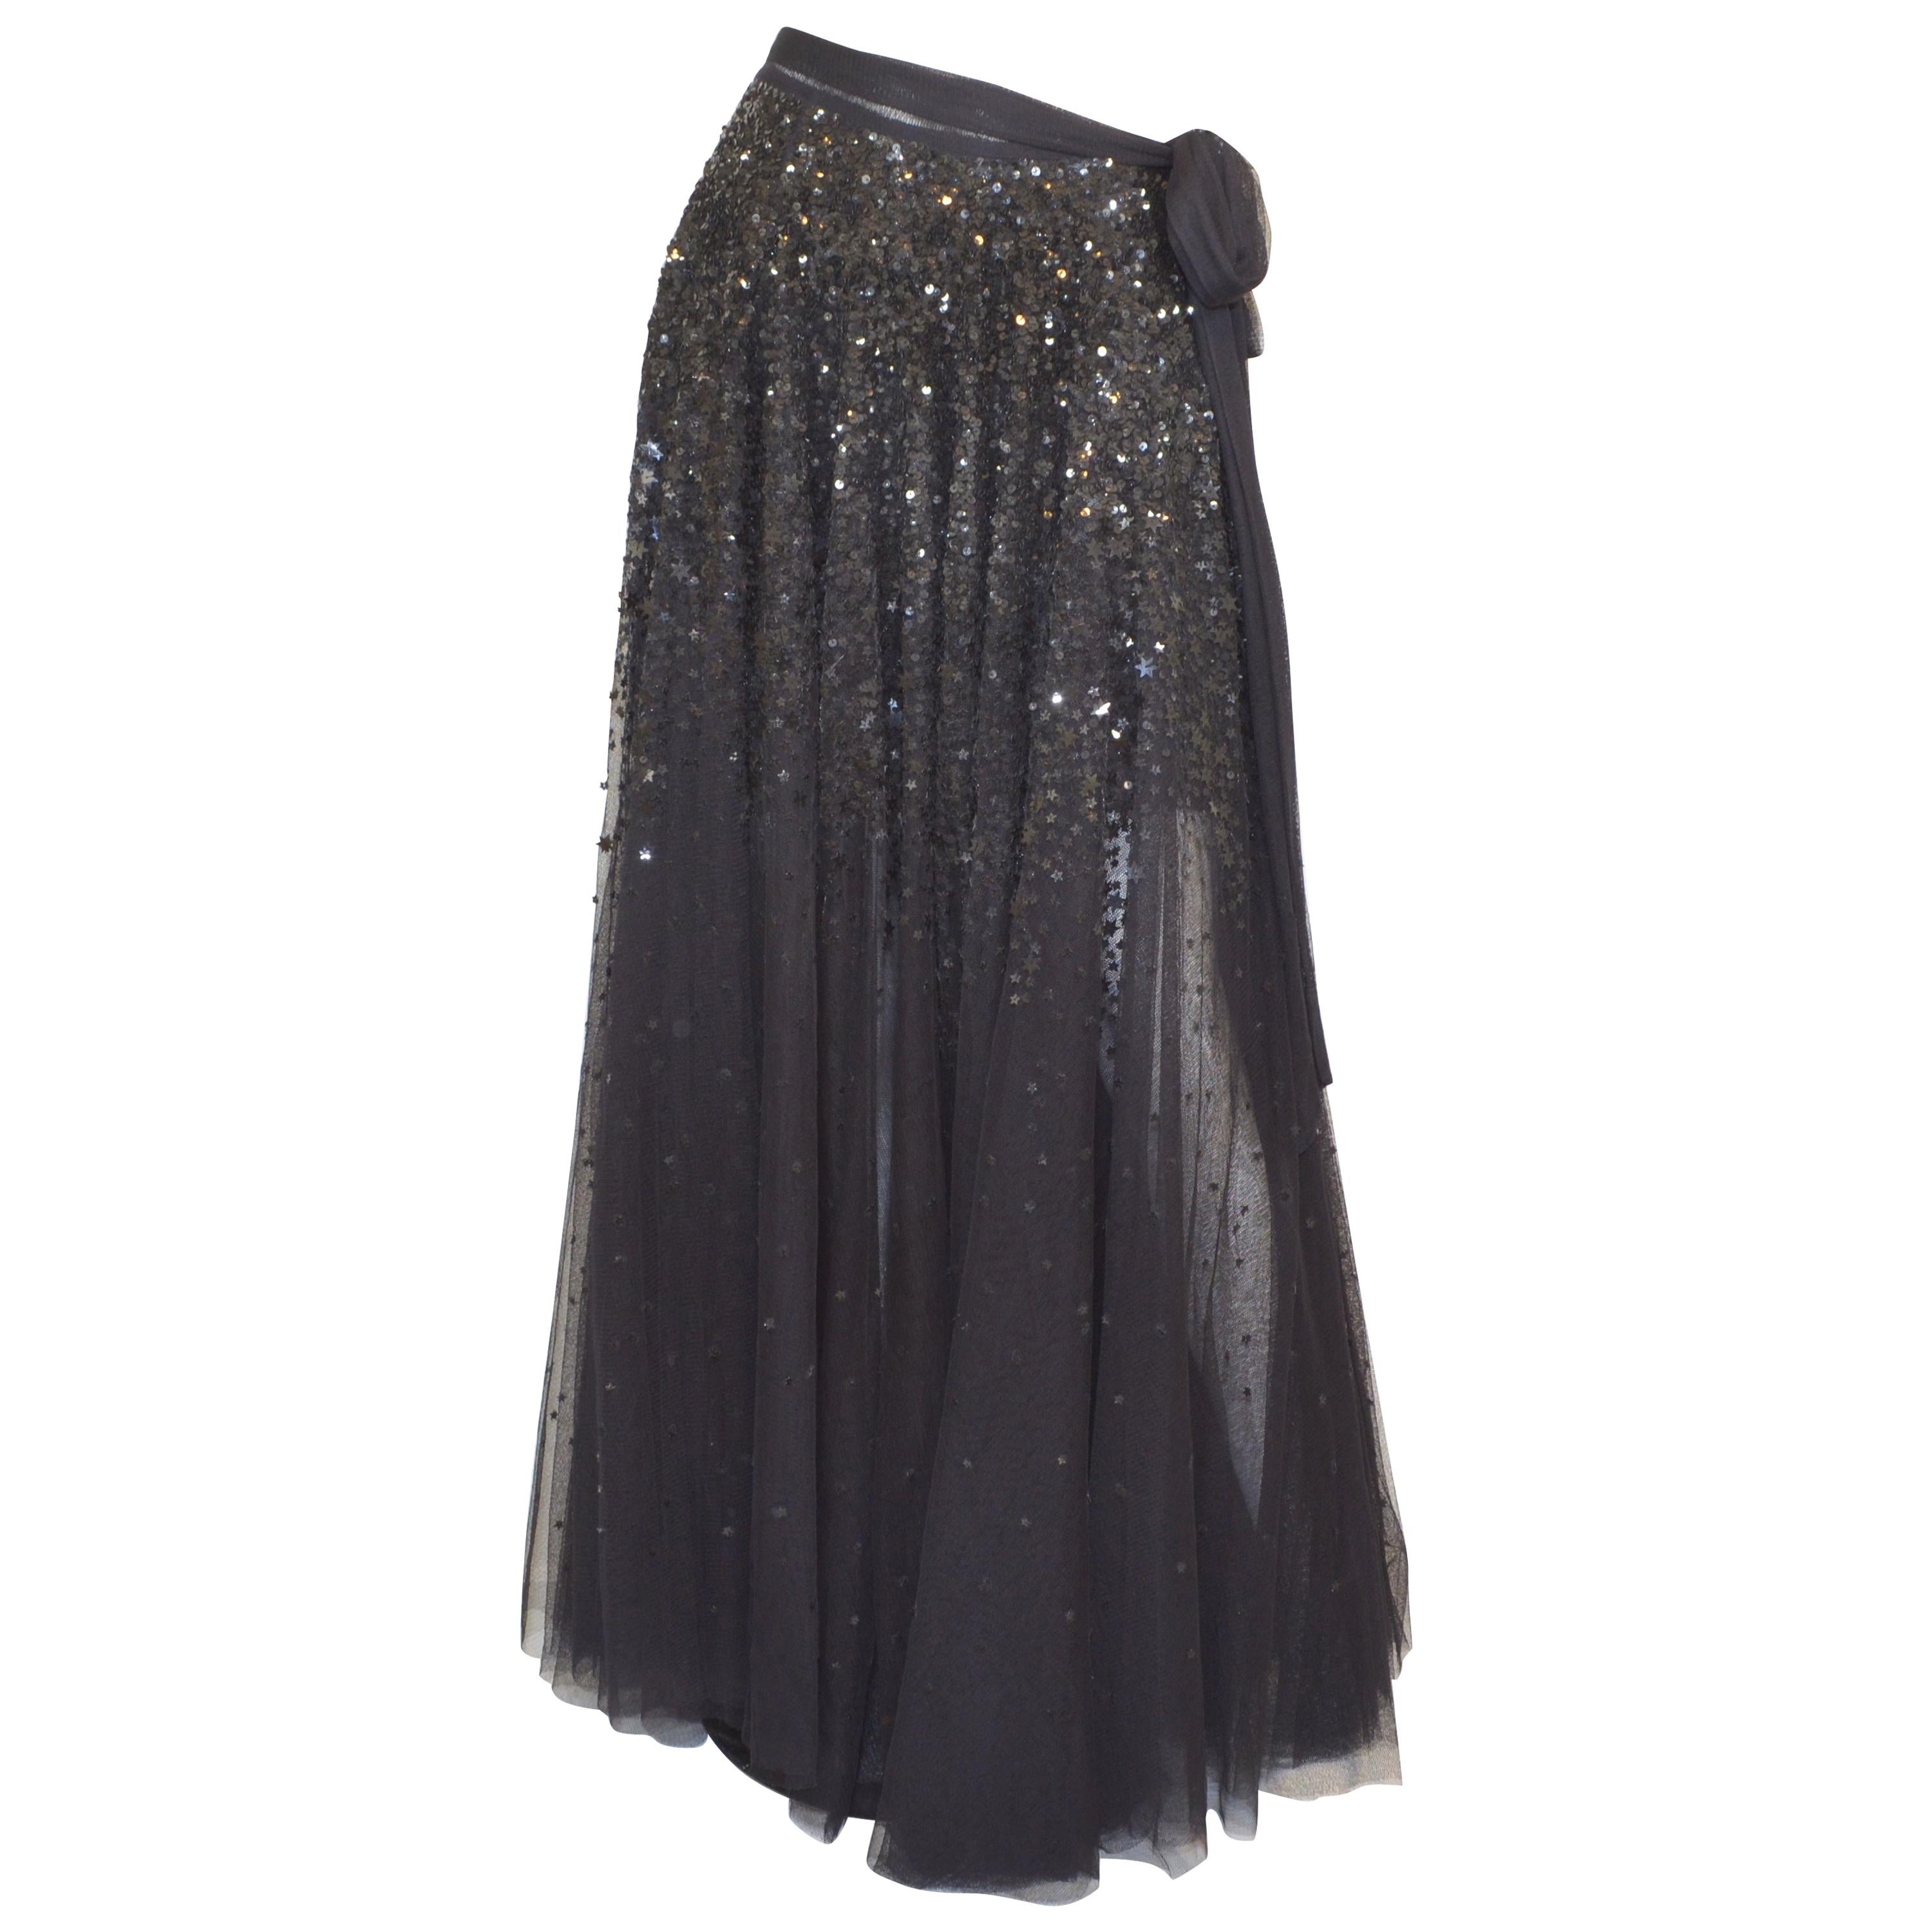 Jean Paul Gaultier Black Mesh Skirt with Star Sequins